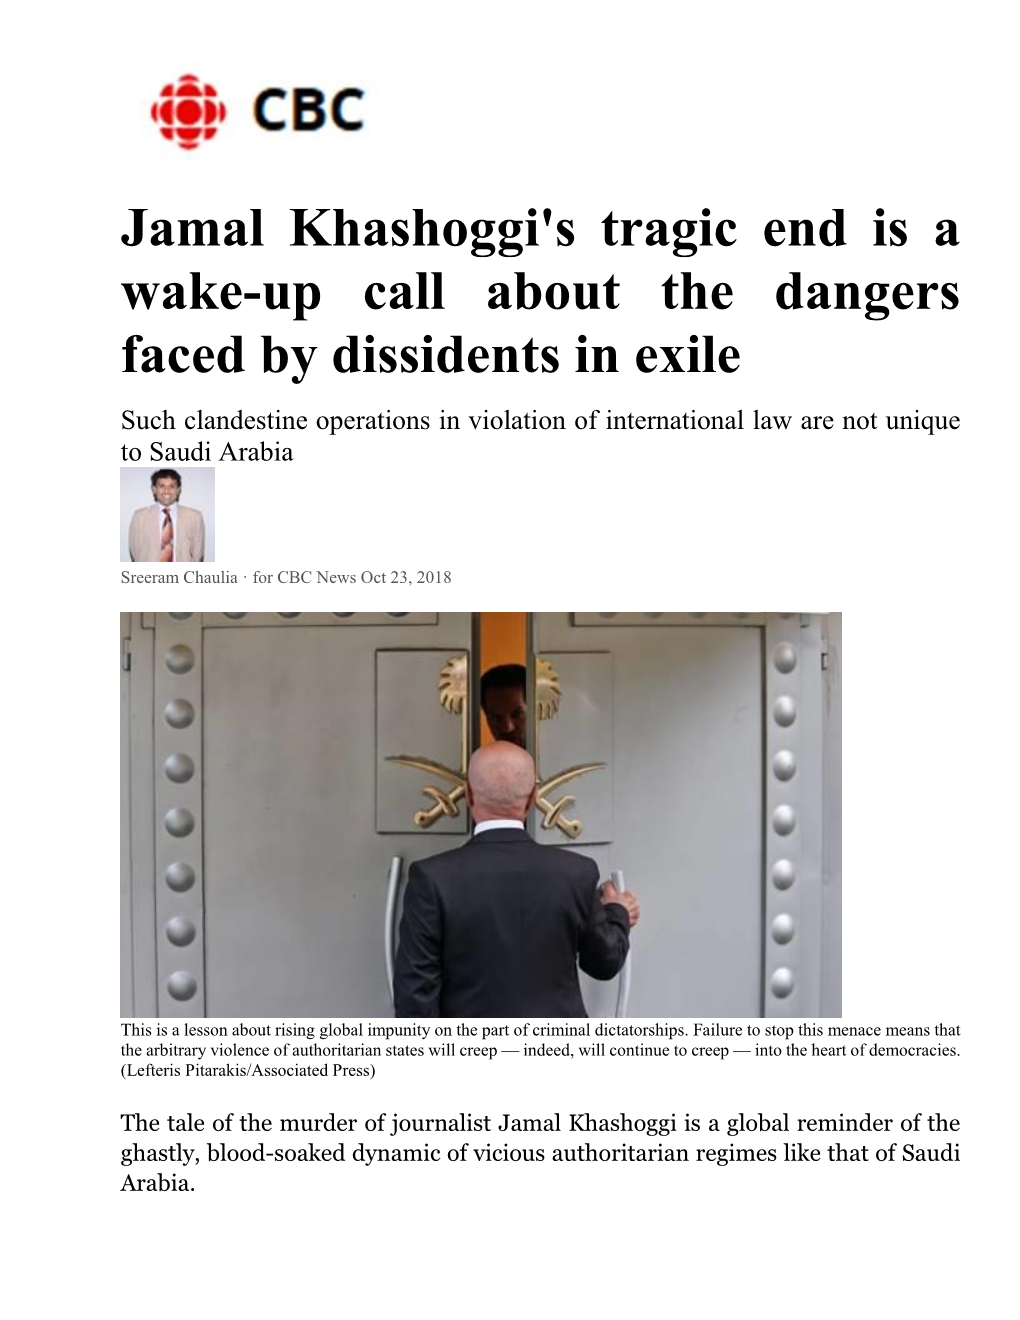 Jamal Khashoggi's Tragic End Is a Wake-Up Call About the Dangers